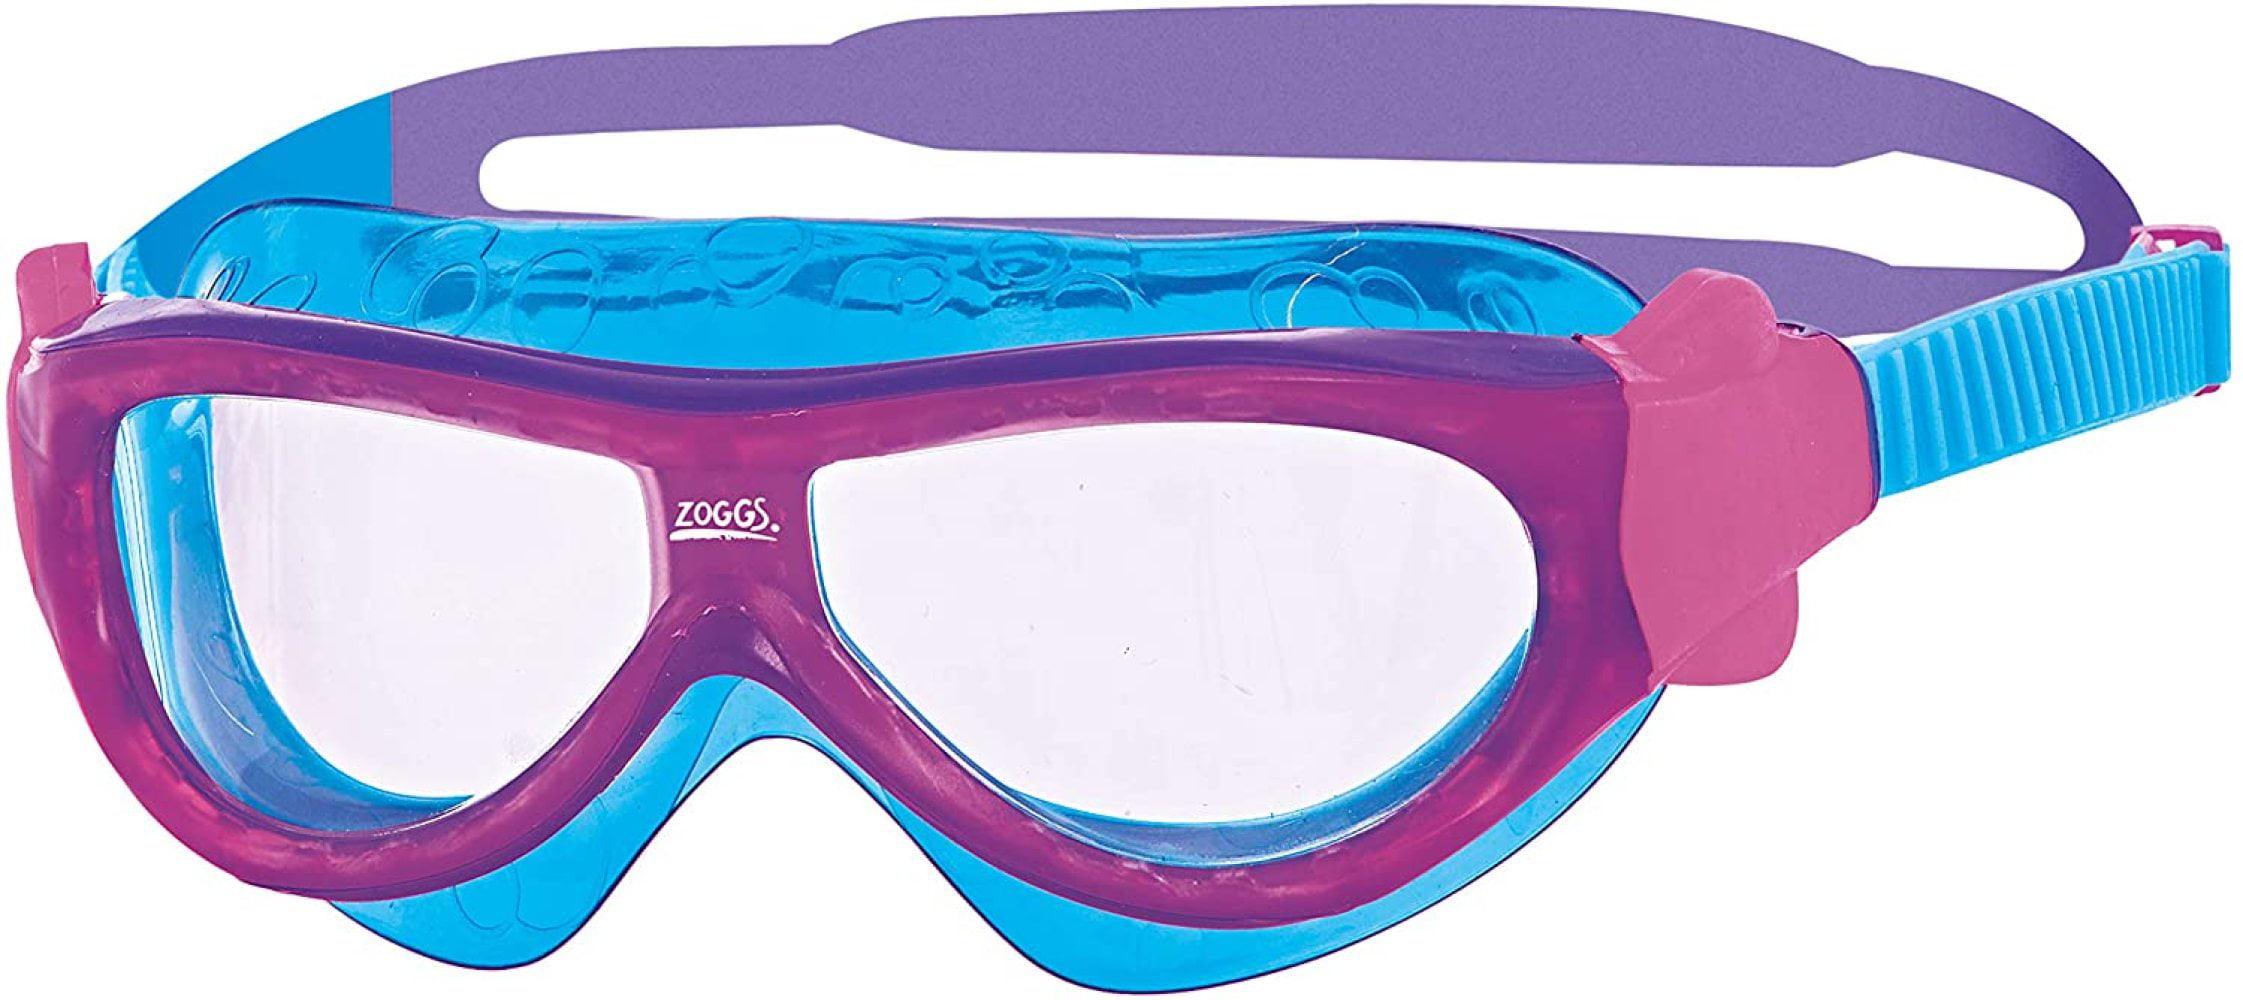 Zoggs Phantom Kids Mask Childs Swimming Goggle Eye Protection 0-14 Pink Purple 